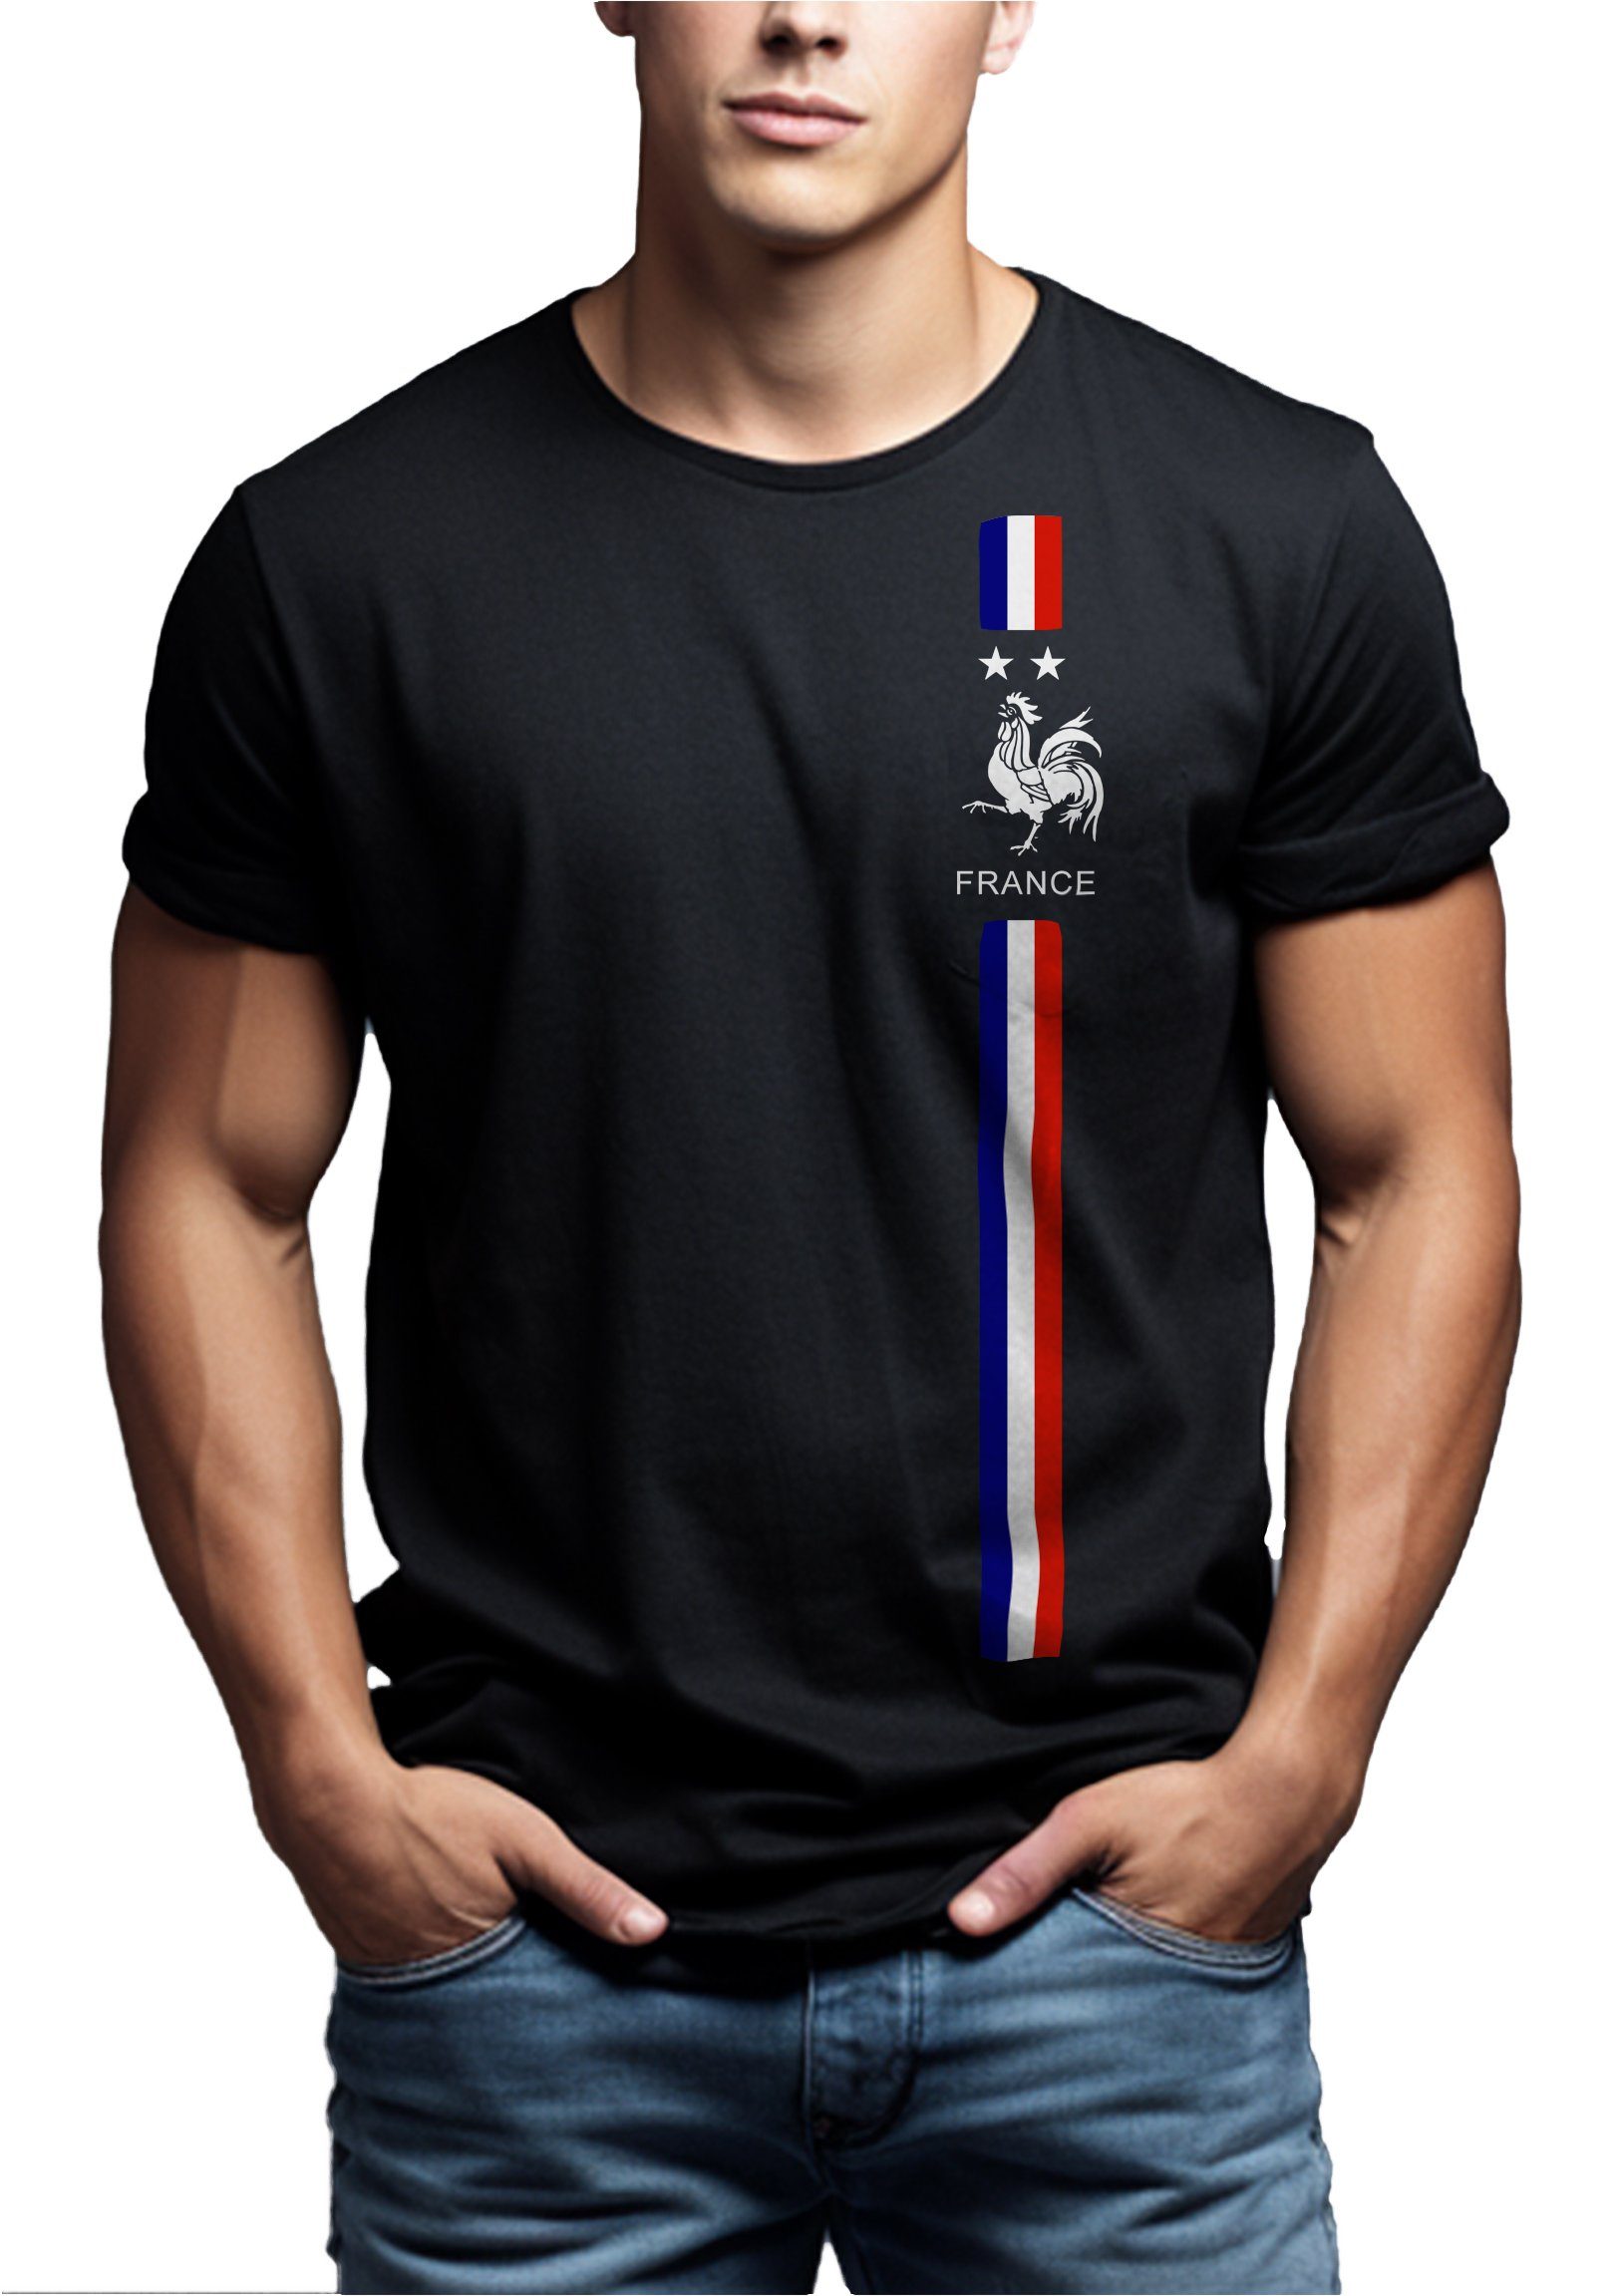 MAKAYA Print-Shirt Herren Fußball Frankreich Trikot Männer Fahne Geschenke Schwarz Flagge